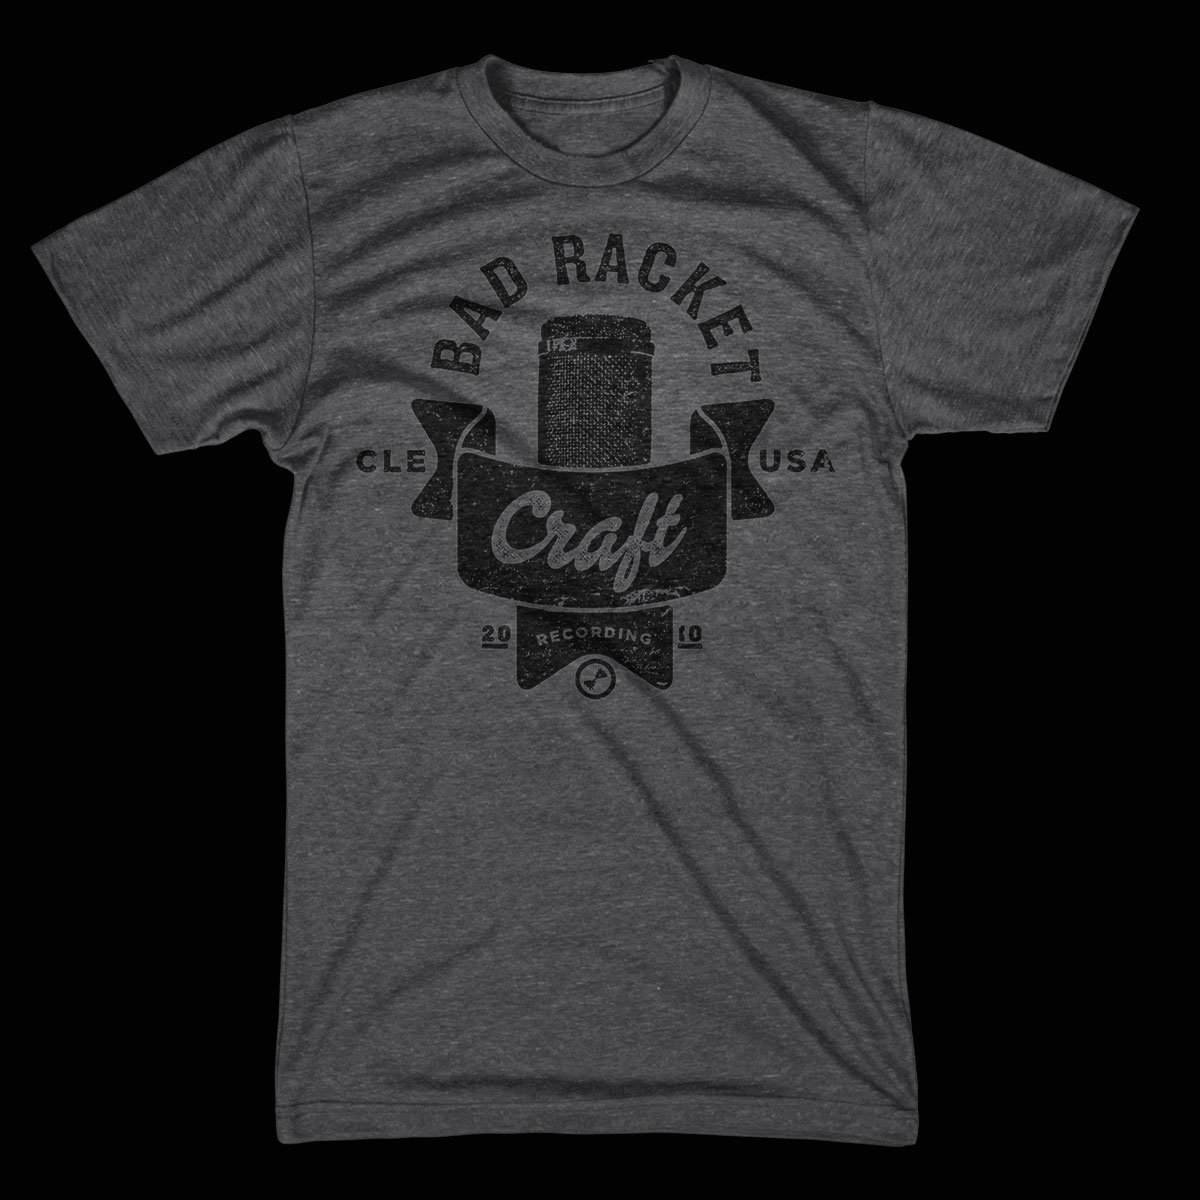 Bad Racket – Shirt Design